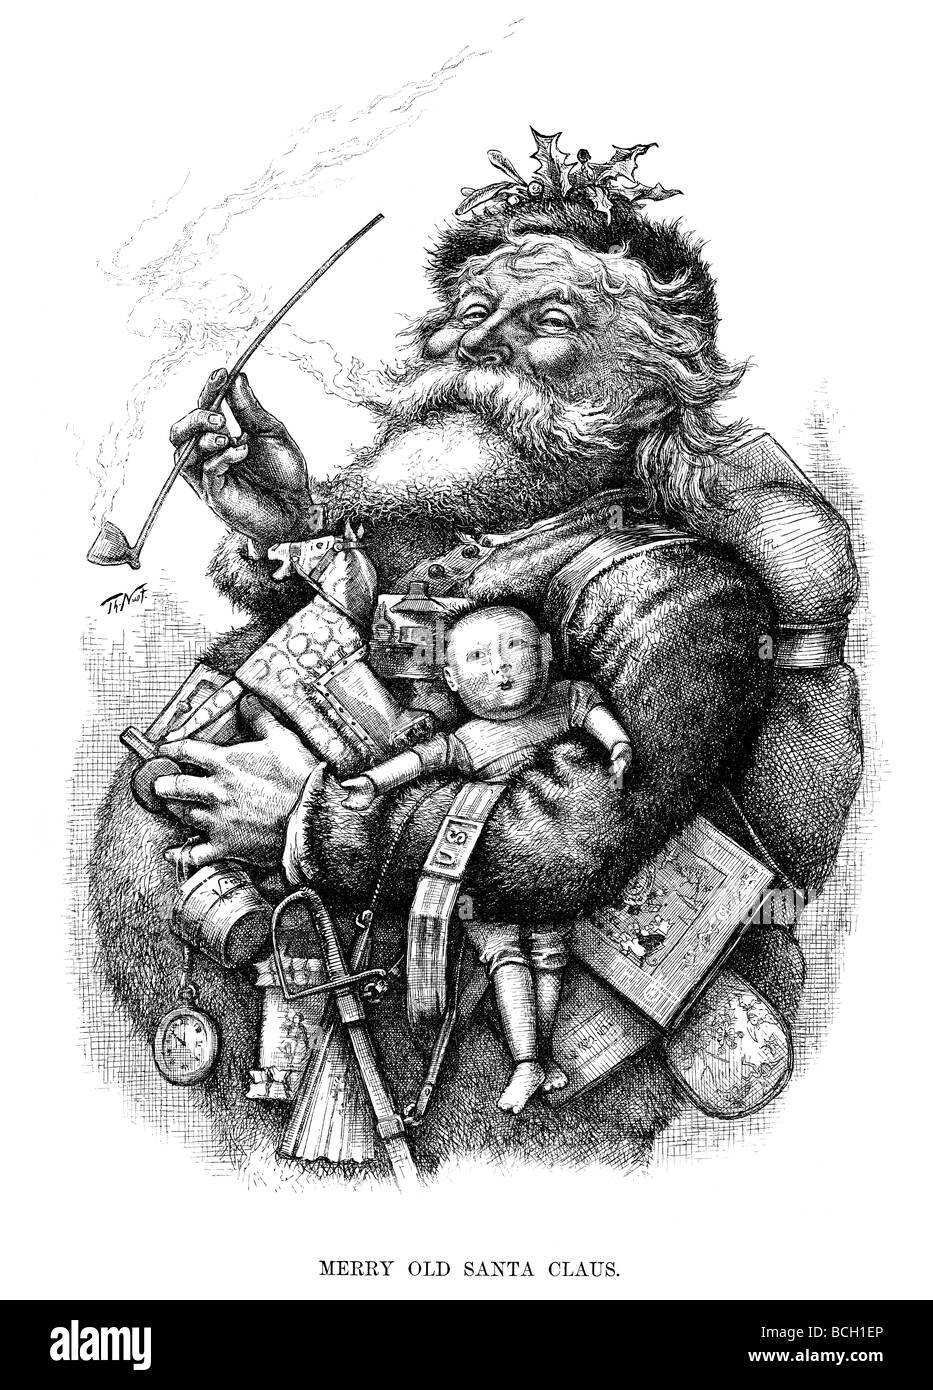 Merry Old Santa Claus. Classic 19c wood cut of Santa Claus by Thomas Nast. Stock Photo